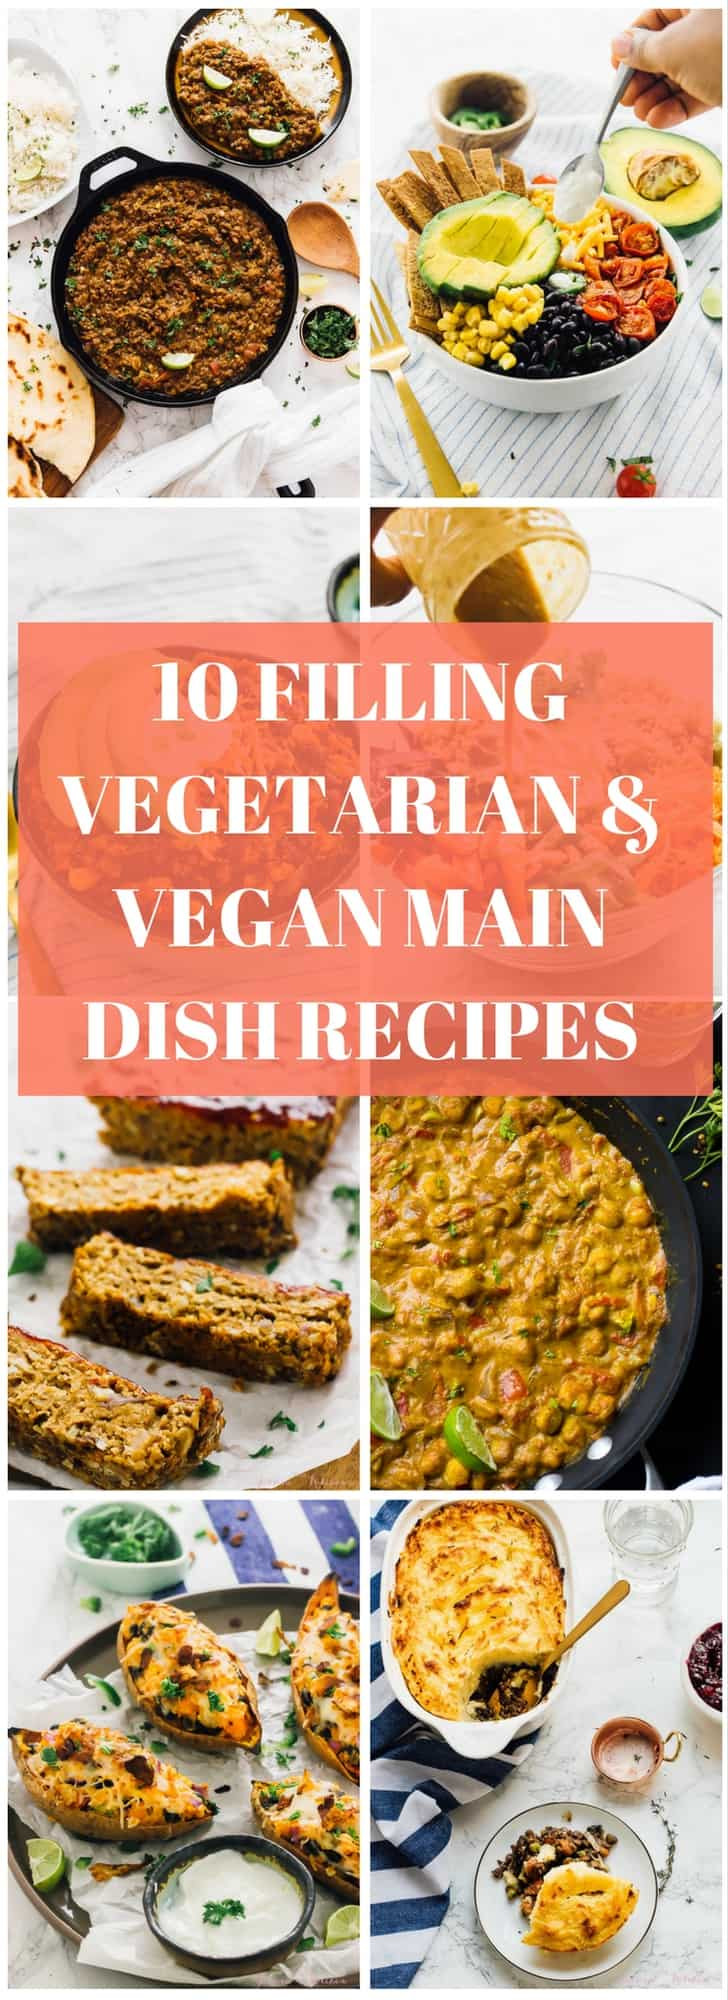 Filling Vegetarian Recipes
 10 Filling Ve arian & Vegan Main Dish Recipes Jessica